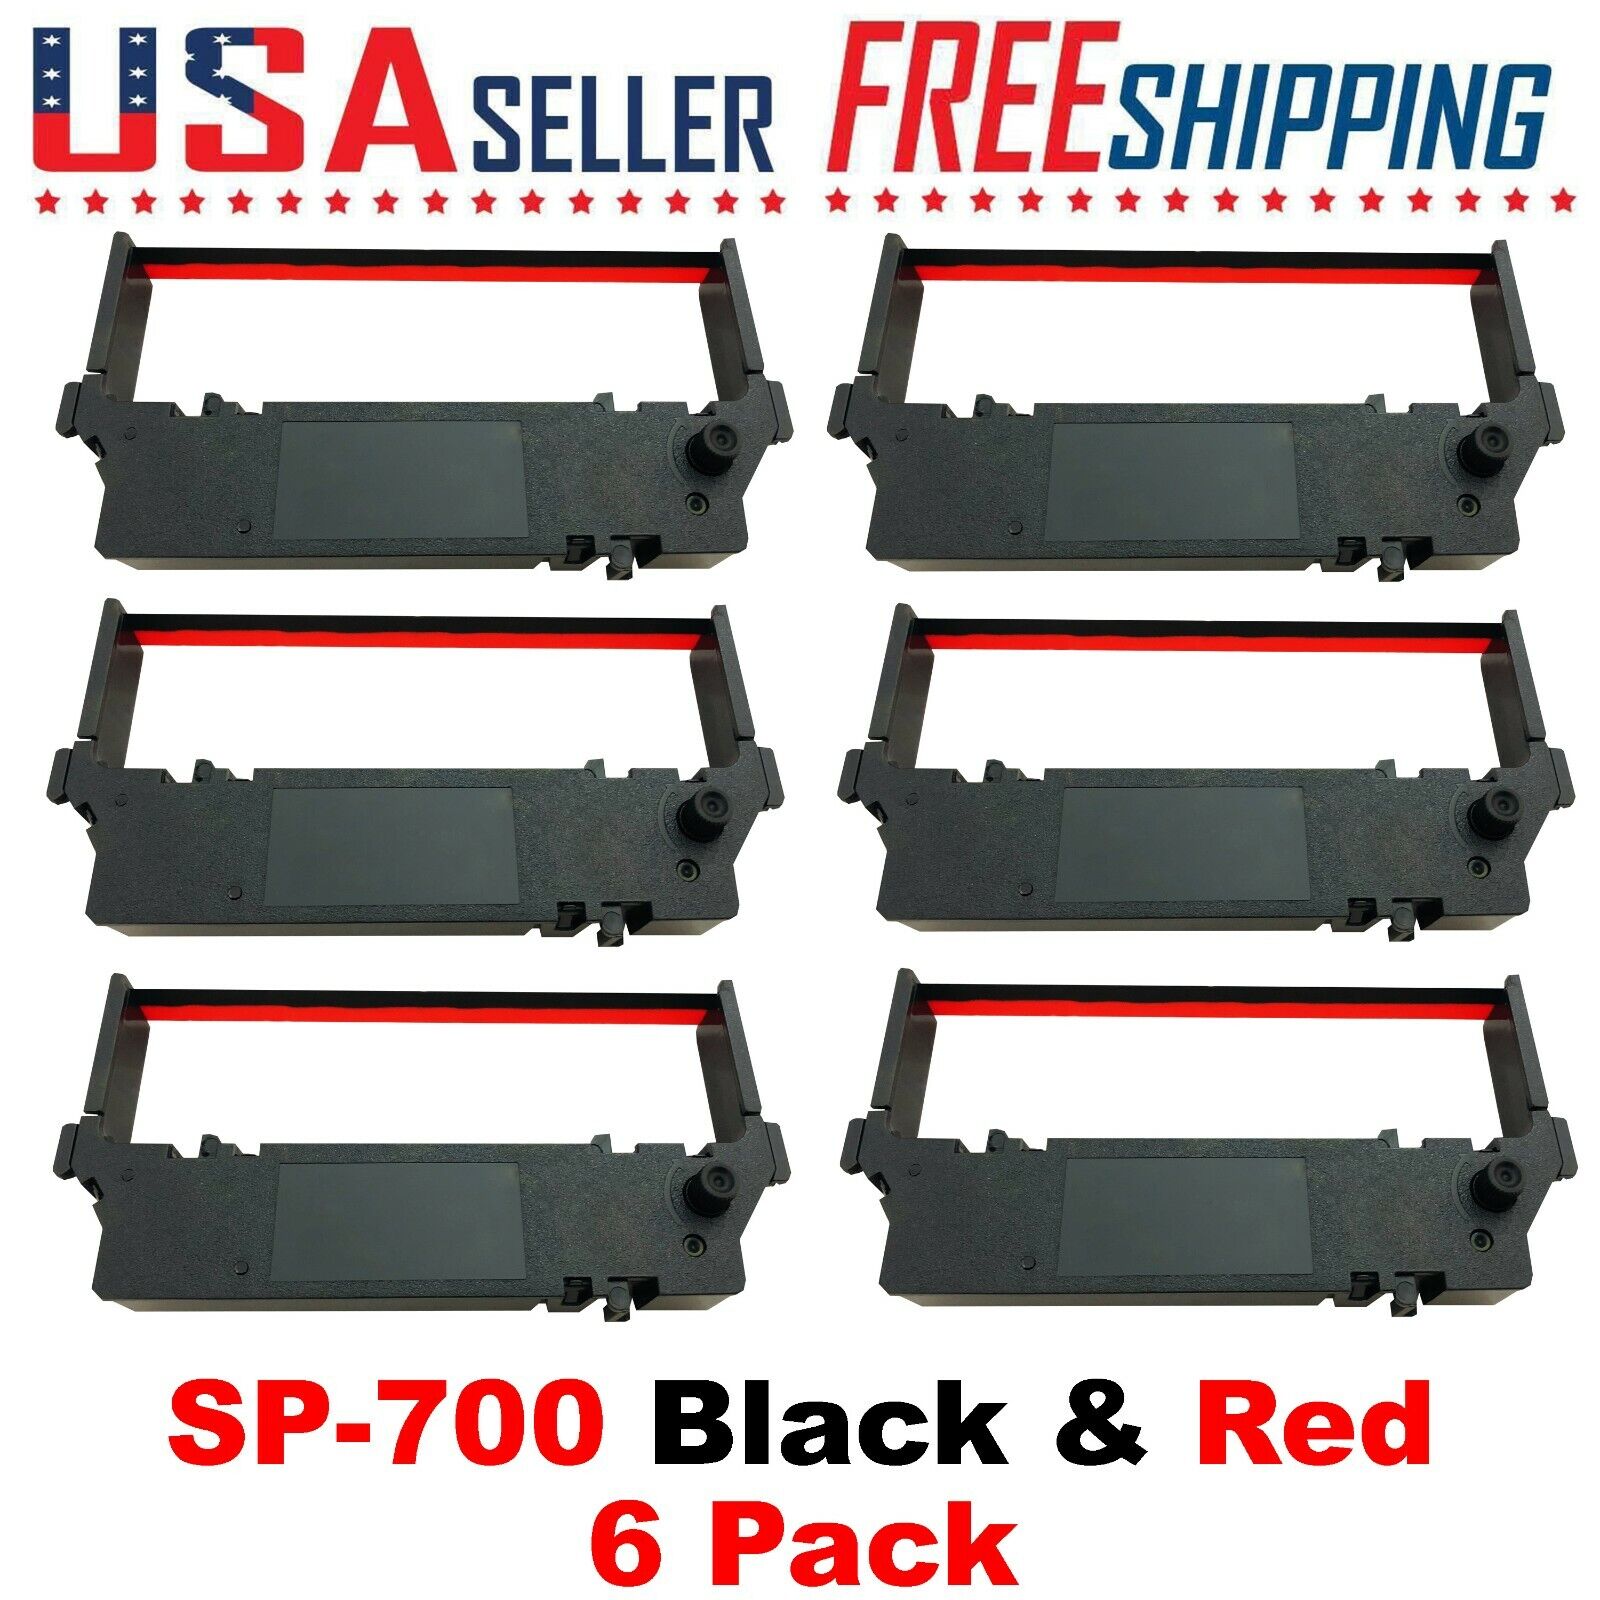 SP-700 x 6 Pack BLACK / RED Star Epson Printer Ribbon Ink SP700